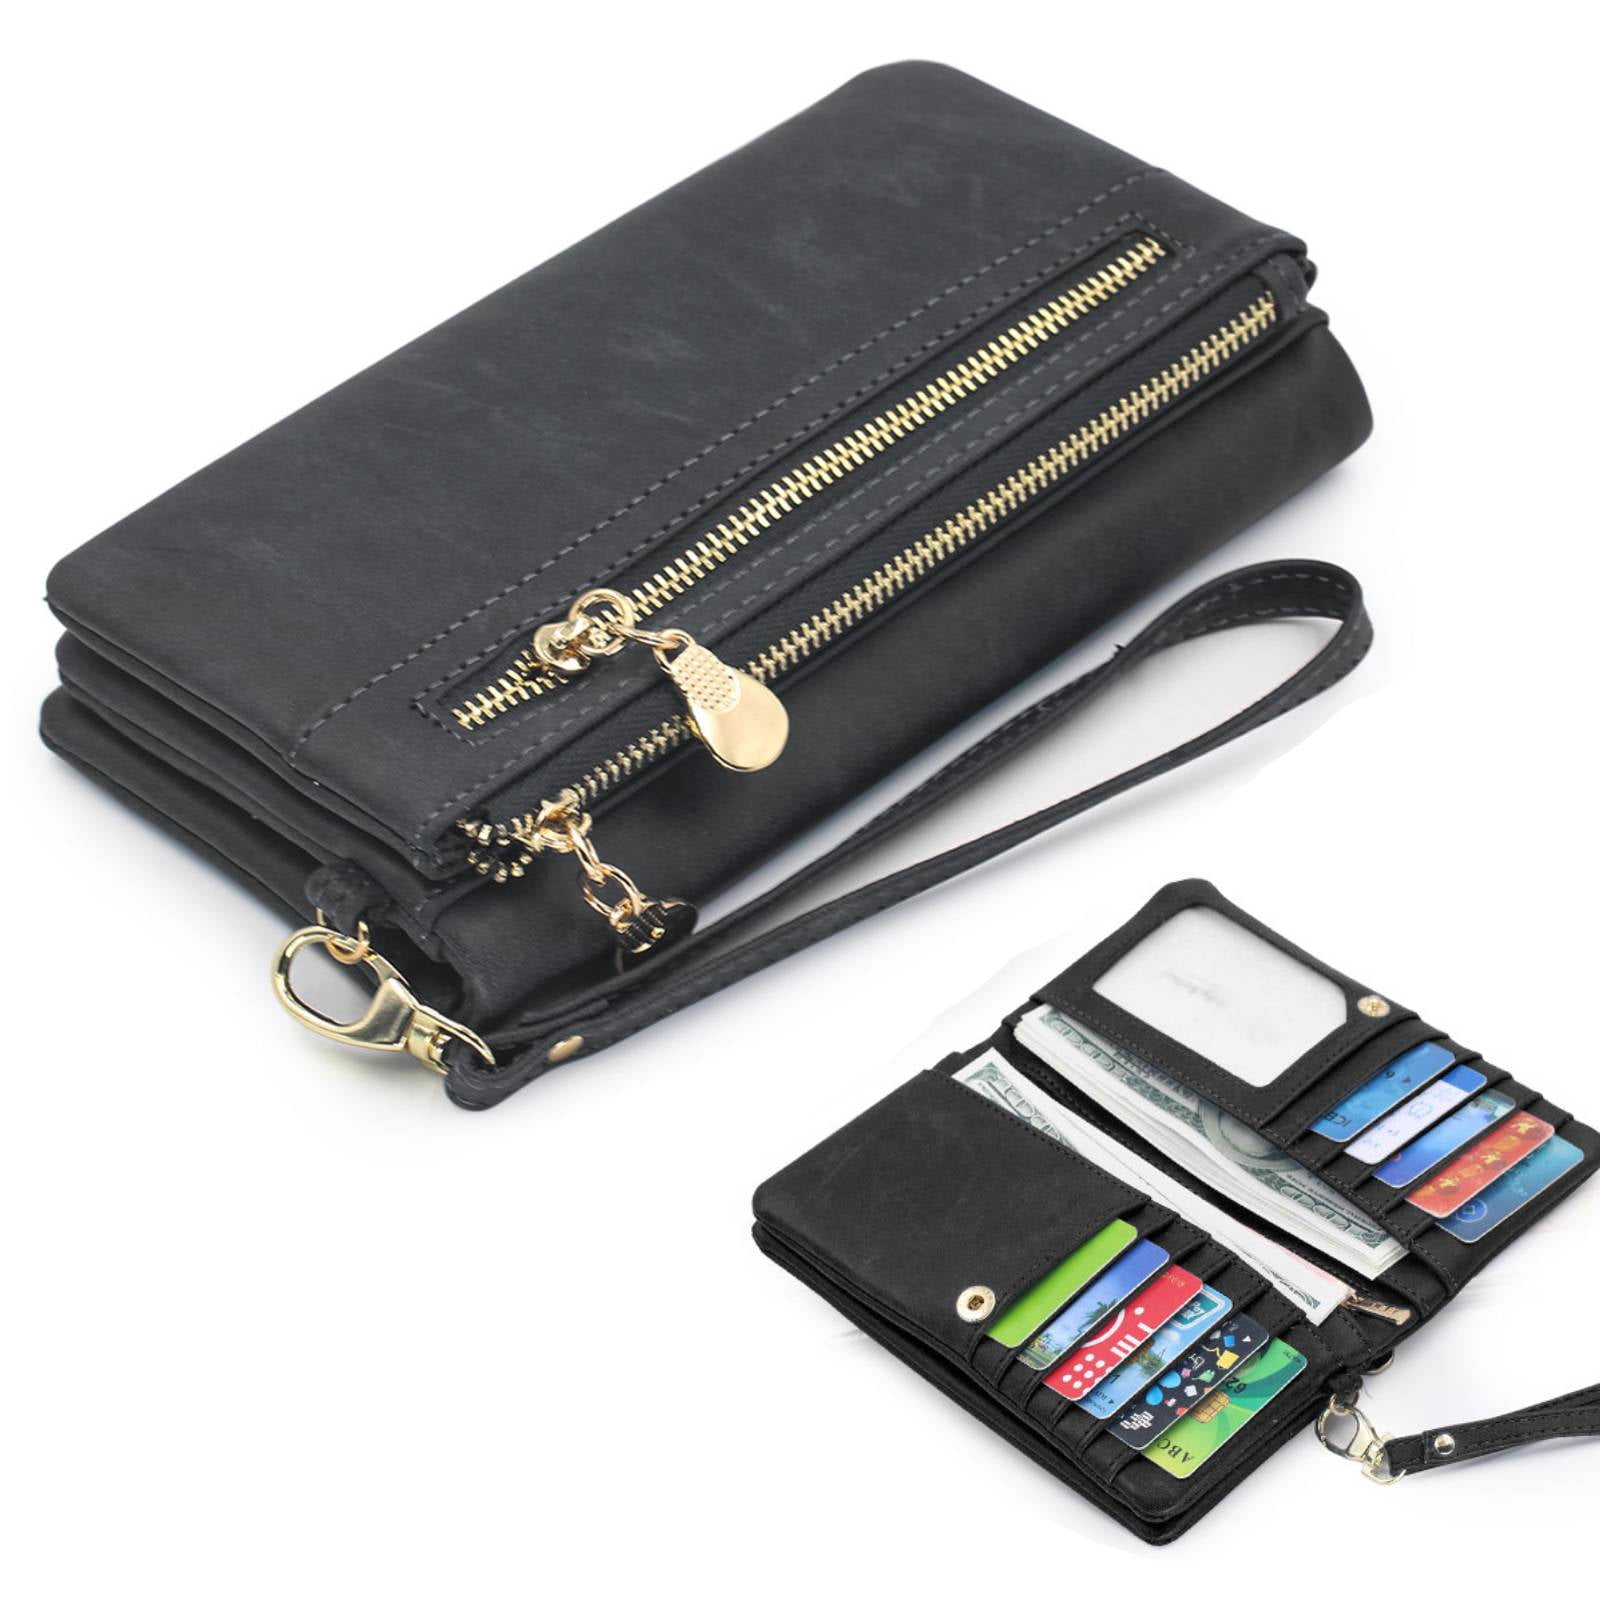 Women Kawaii Cat Leather Wallet Large Capacity Zipper Travel Wristlet Bags Clutch Cellphone Bag